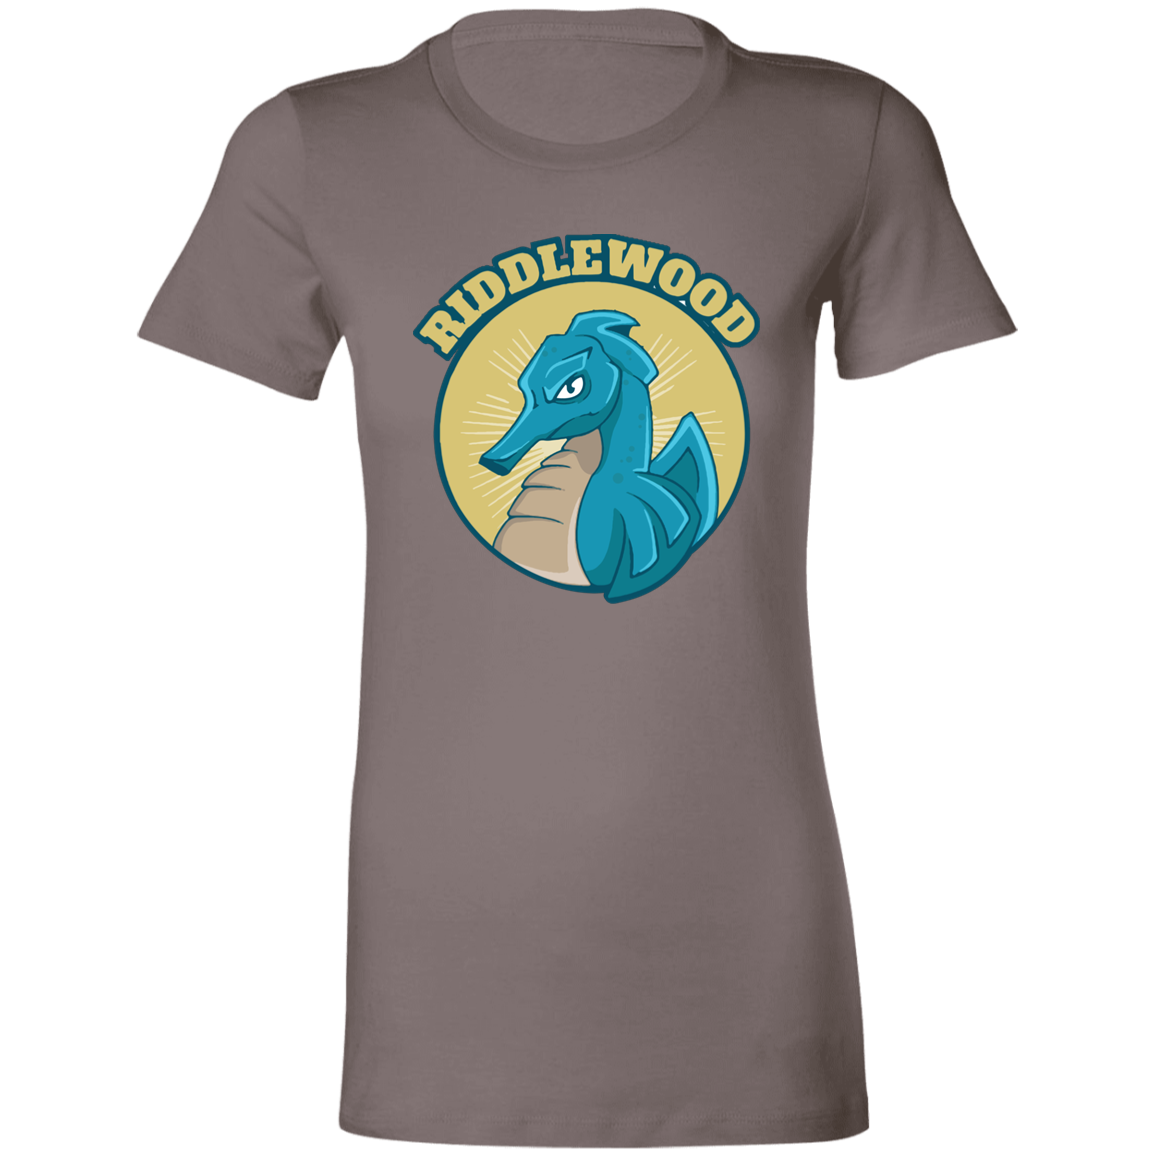 Riddlewood TeamStore Ladies' Favorite T-Shirt